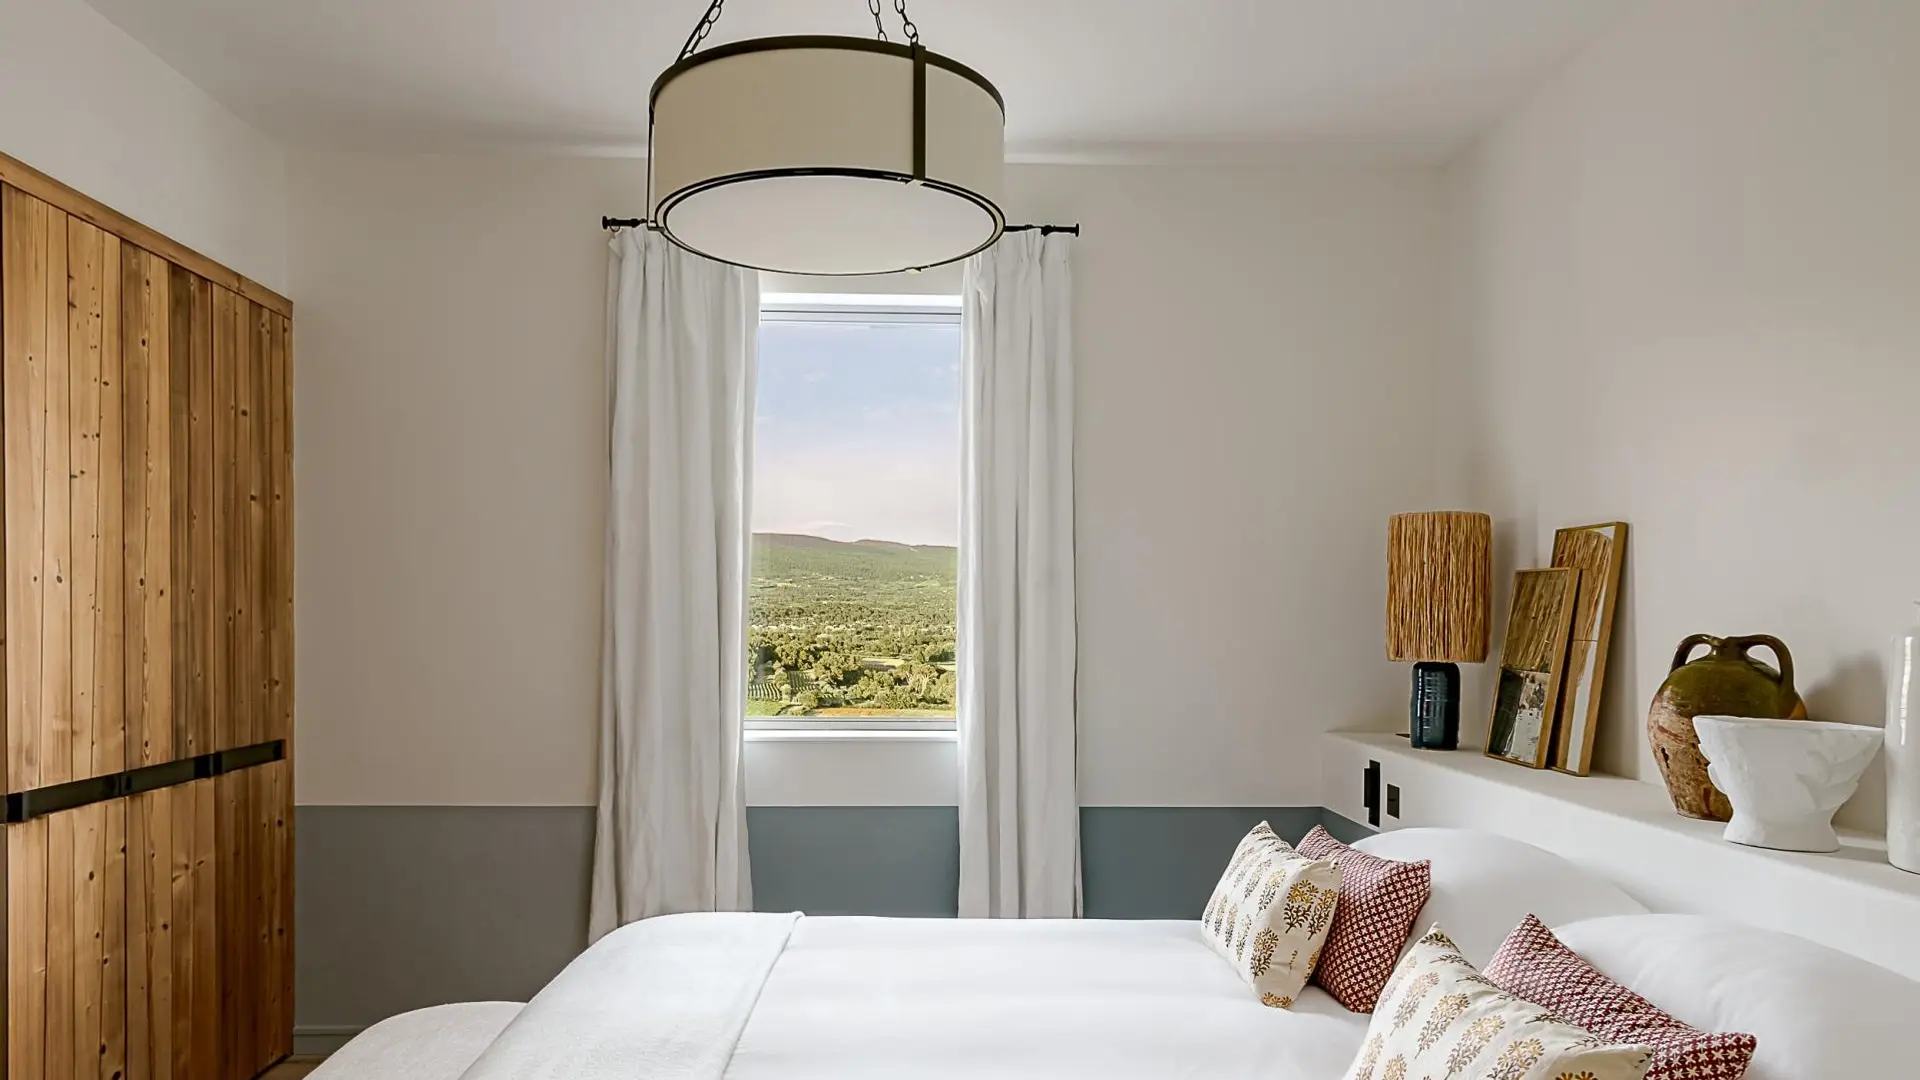 Hotel review Accommodation' - Hôtel Crillon le Brave - Provence - 12